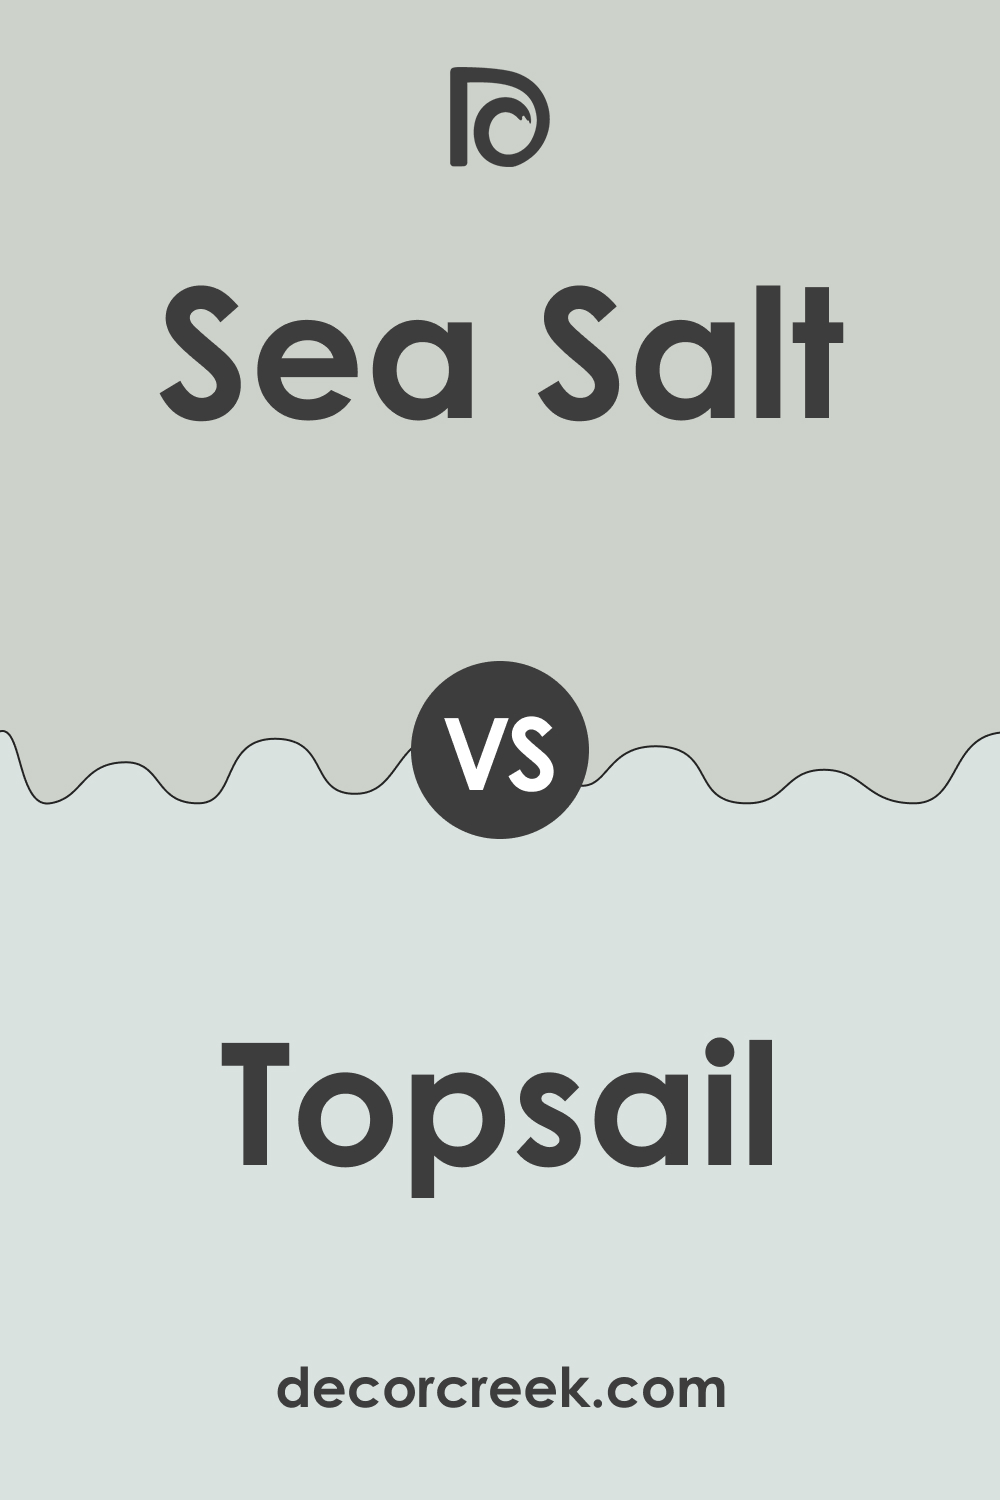 Sea Salt SW 6204 vs. SW 6217 Topsail